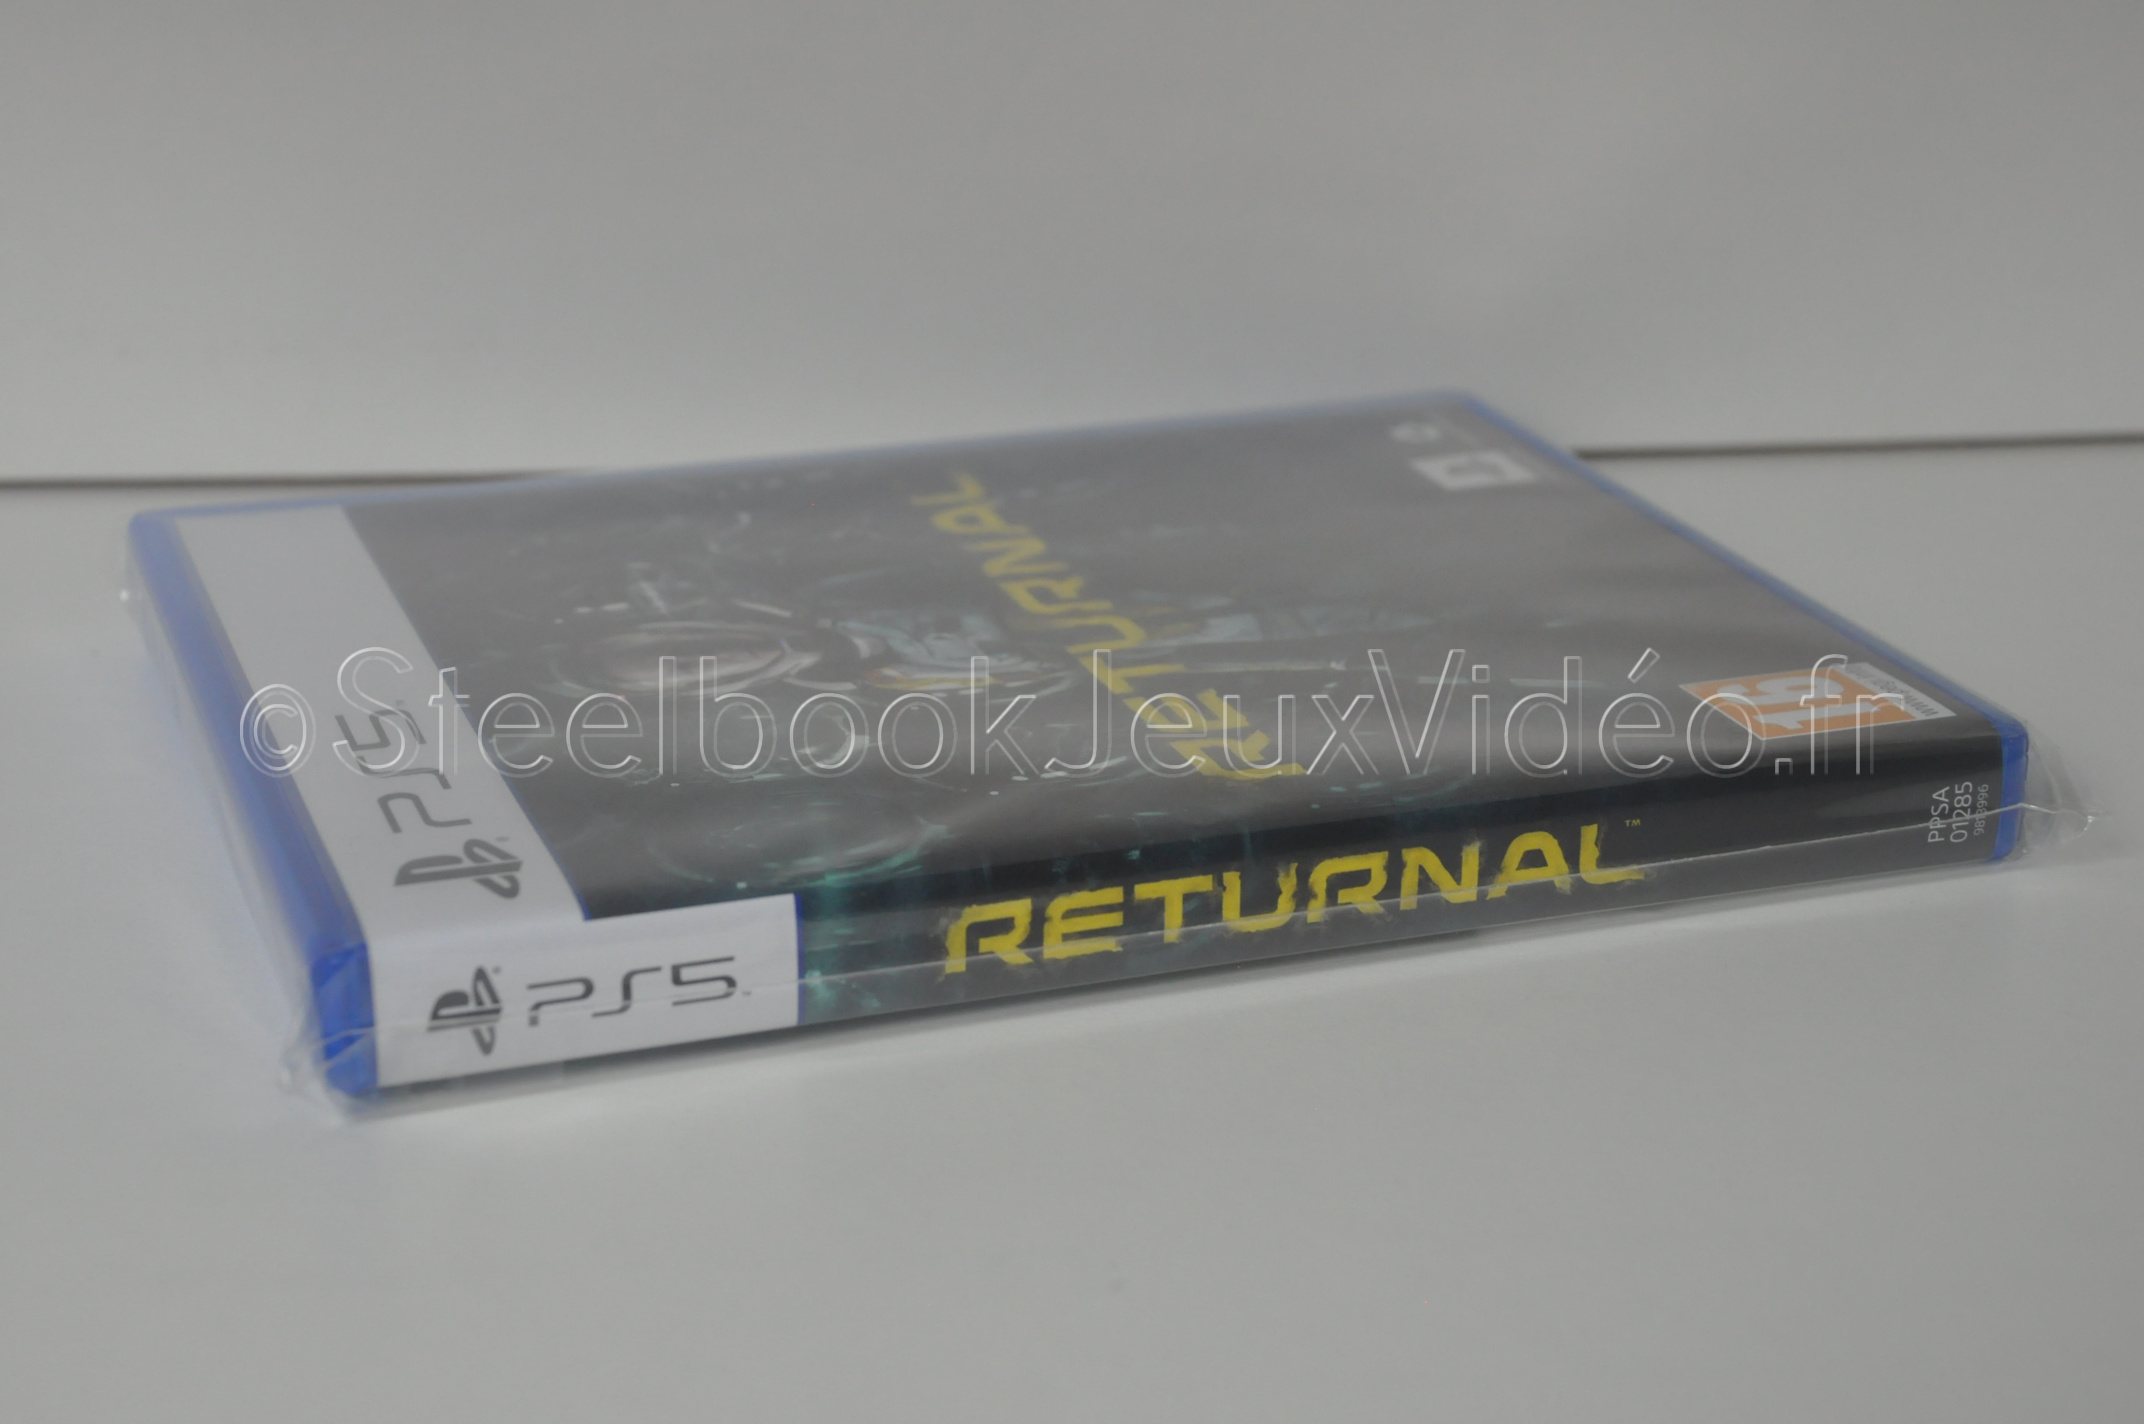 Vente] Protections Souples Format Blu-Ray (G2) ! - Steelbook Jeux Vidéo